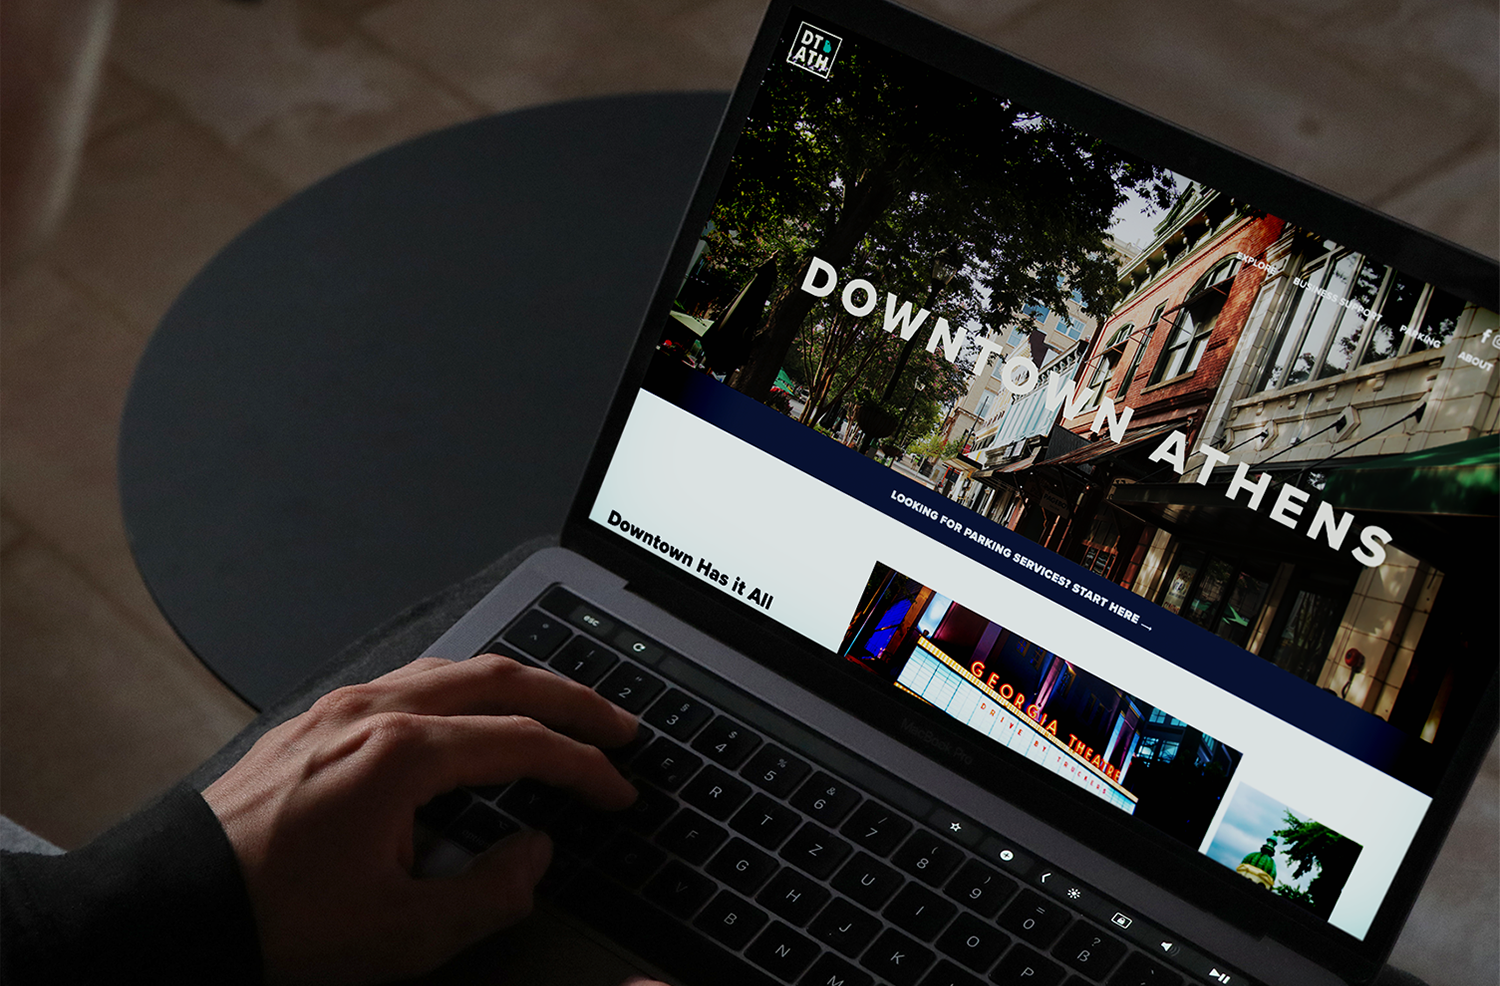 Athens Downtown Development Authority – Website